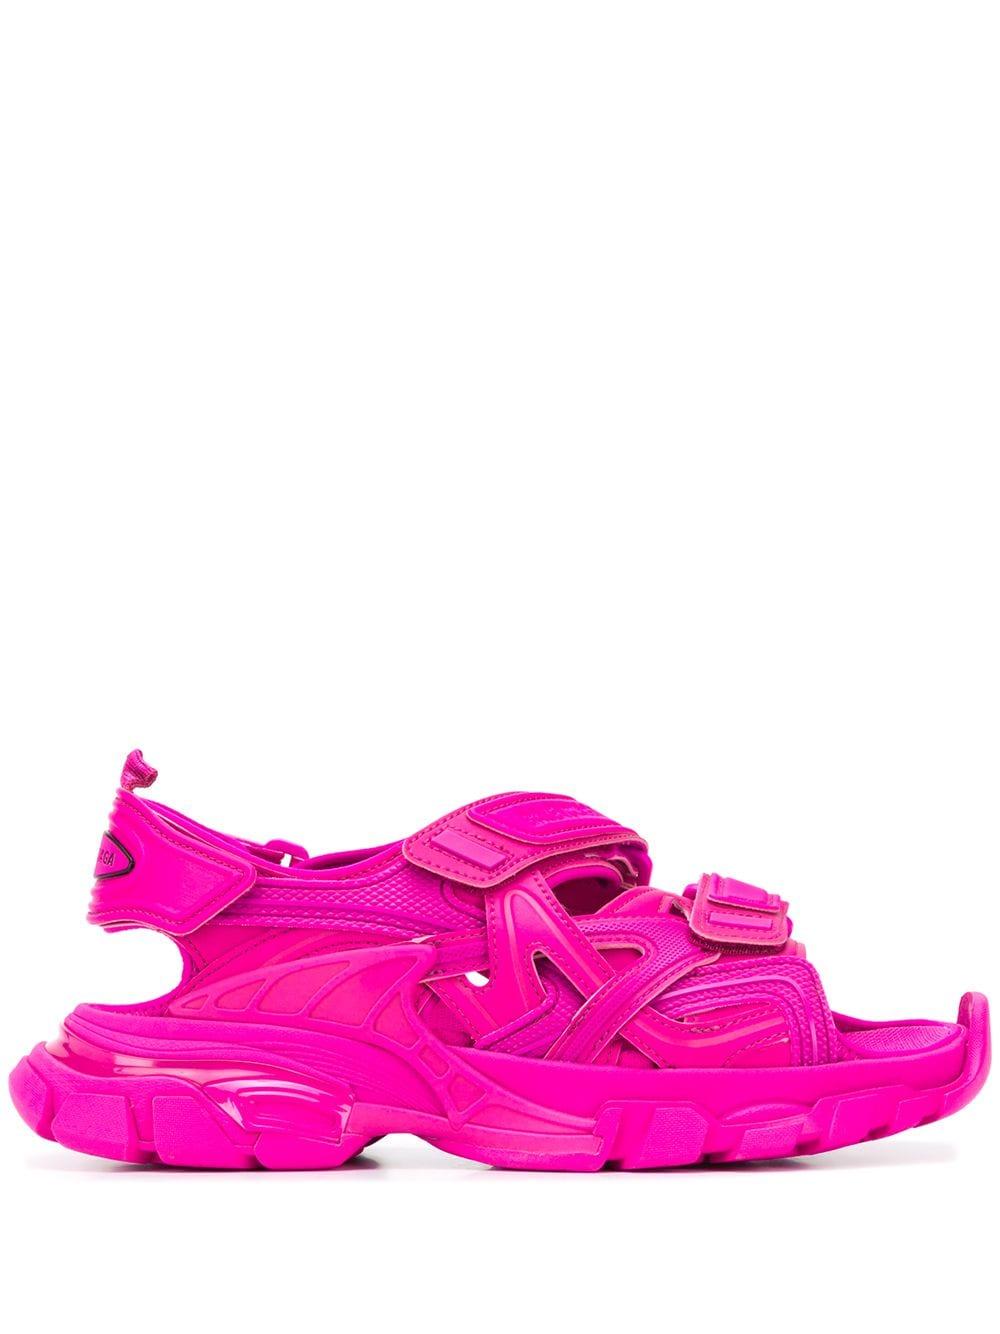 Balenciaga Neoprene Track Sandal in Pink | Lyst